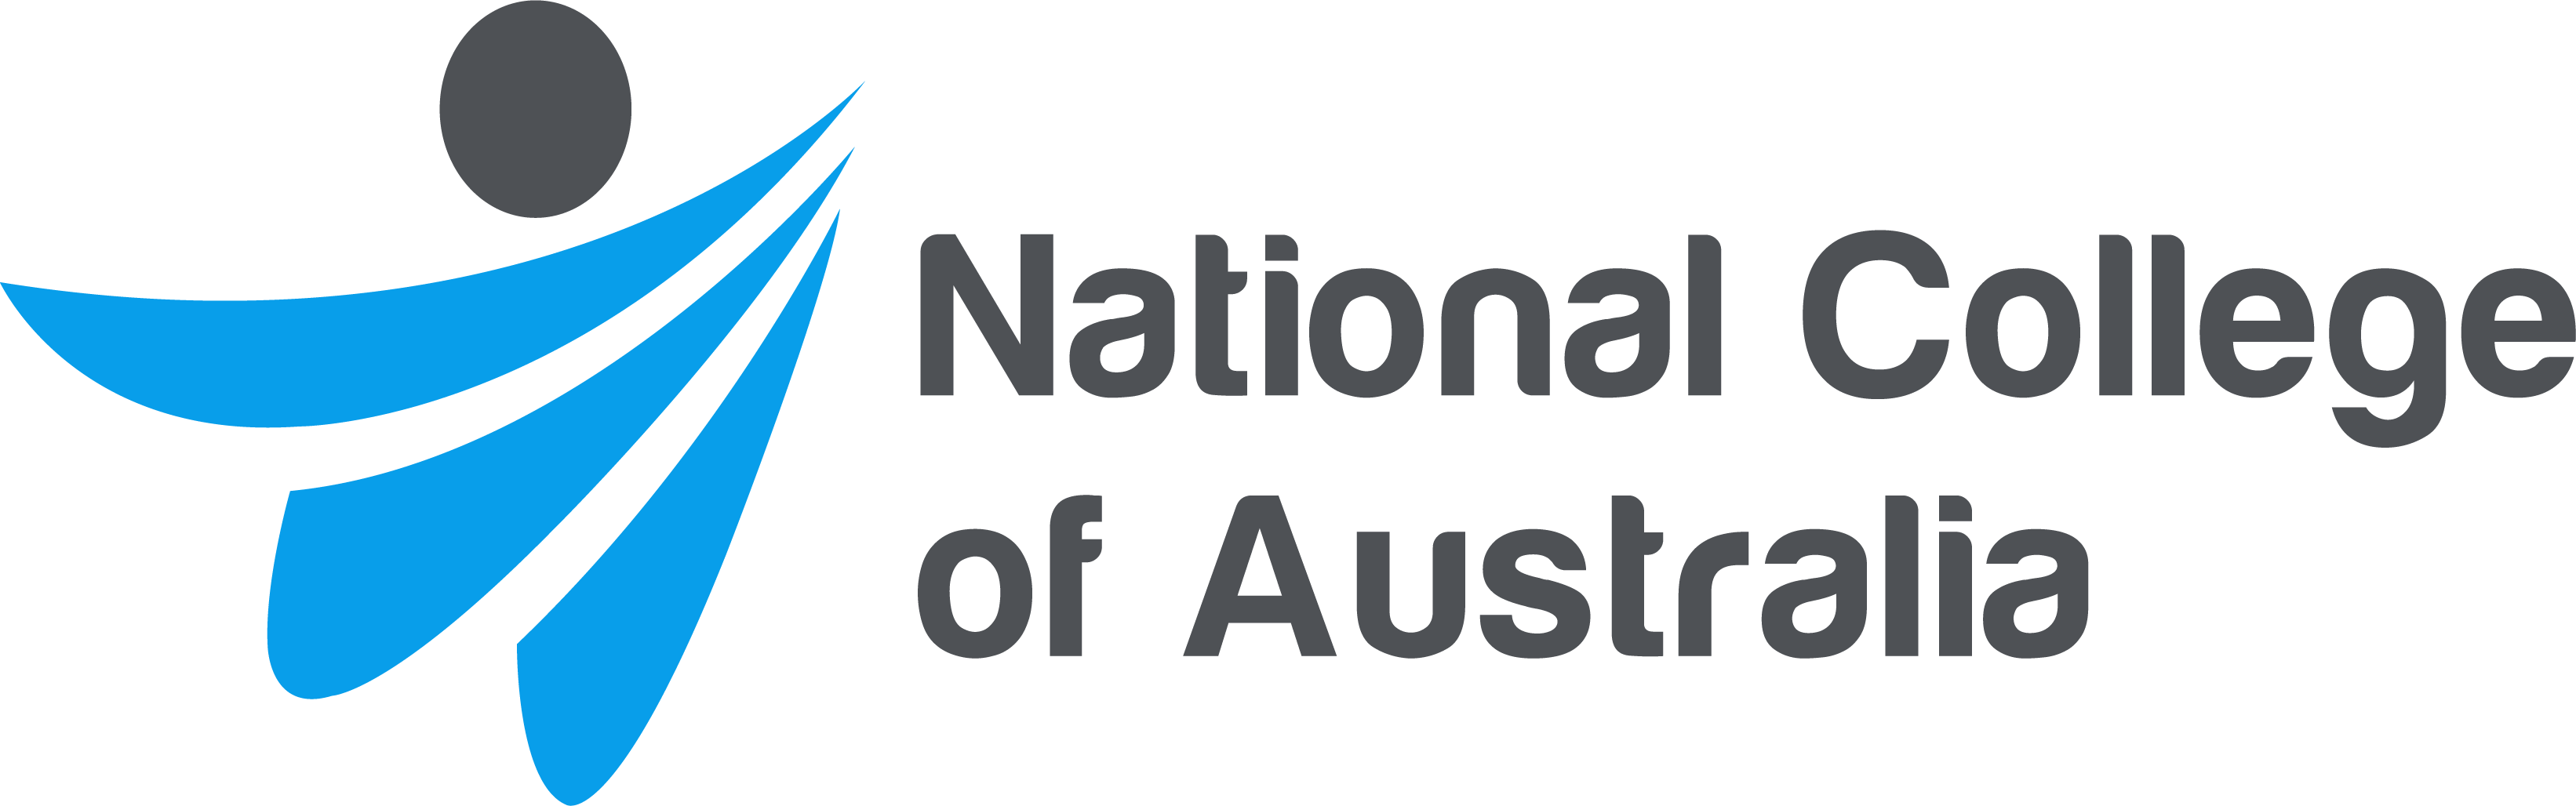 National college of australia logo